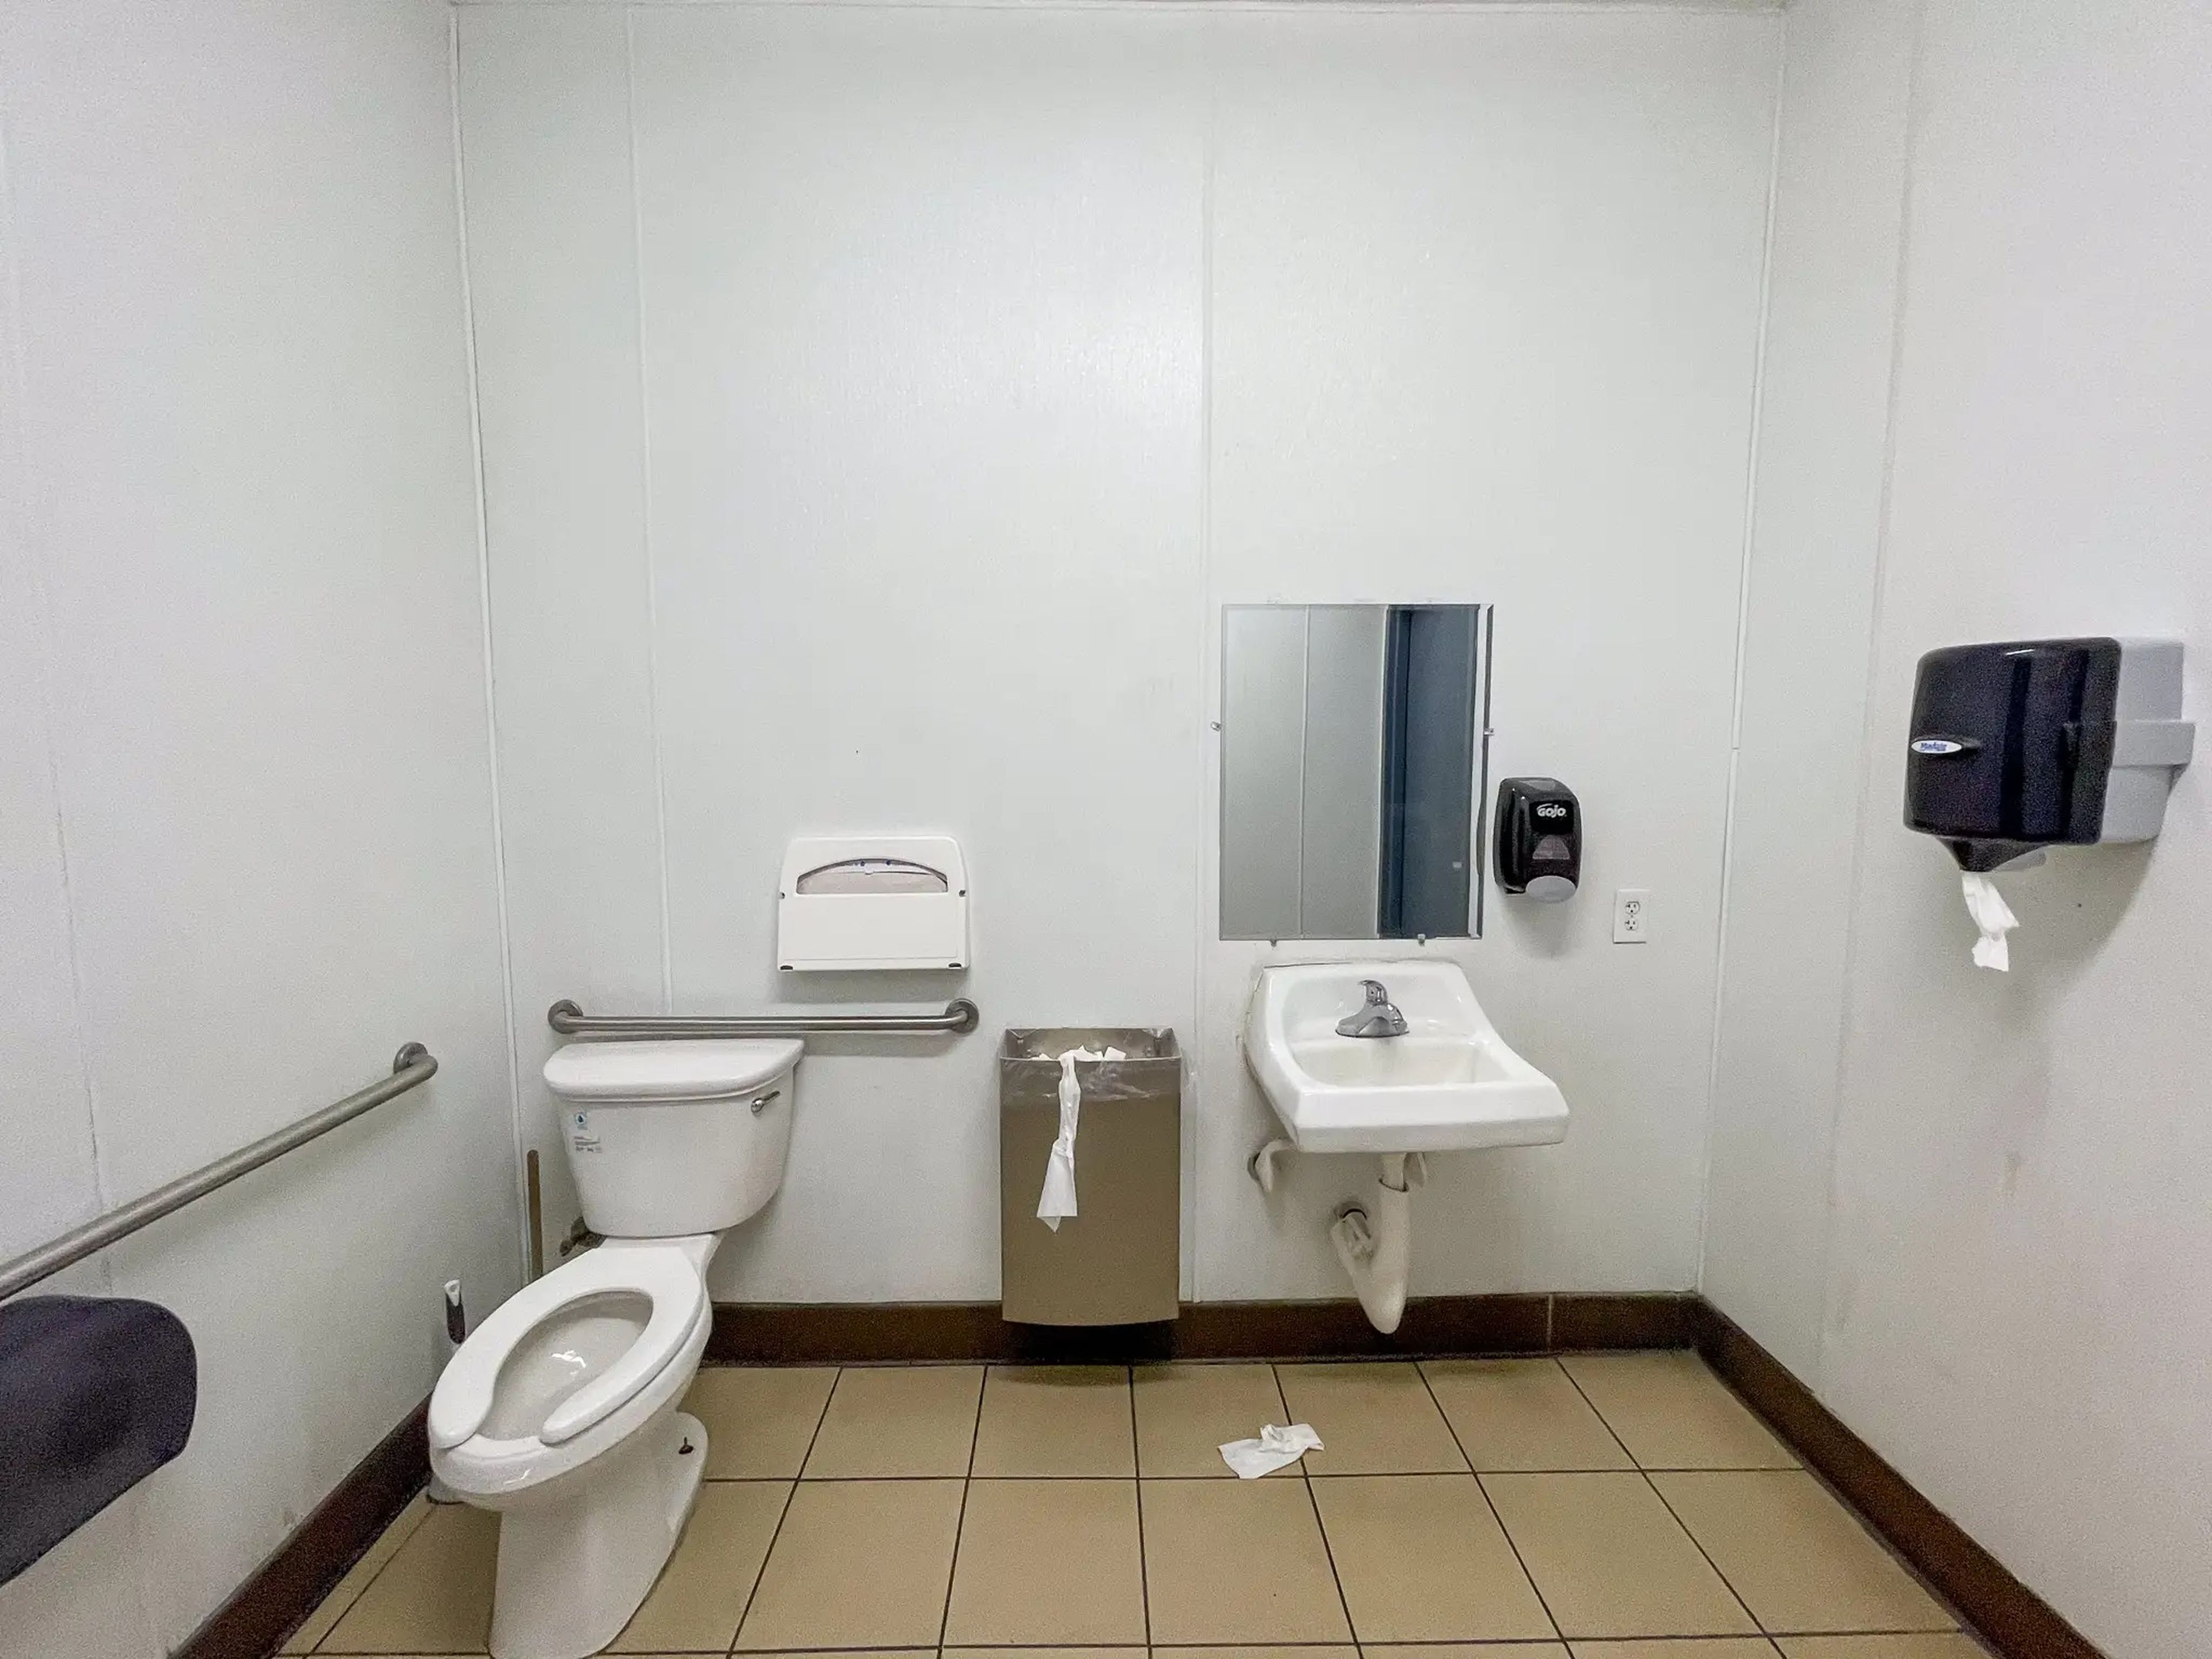 A public restroom during the author's van trip.